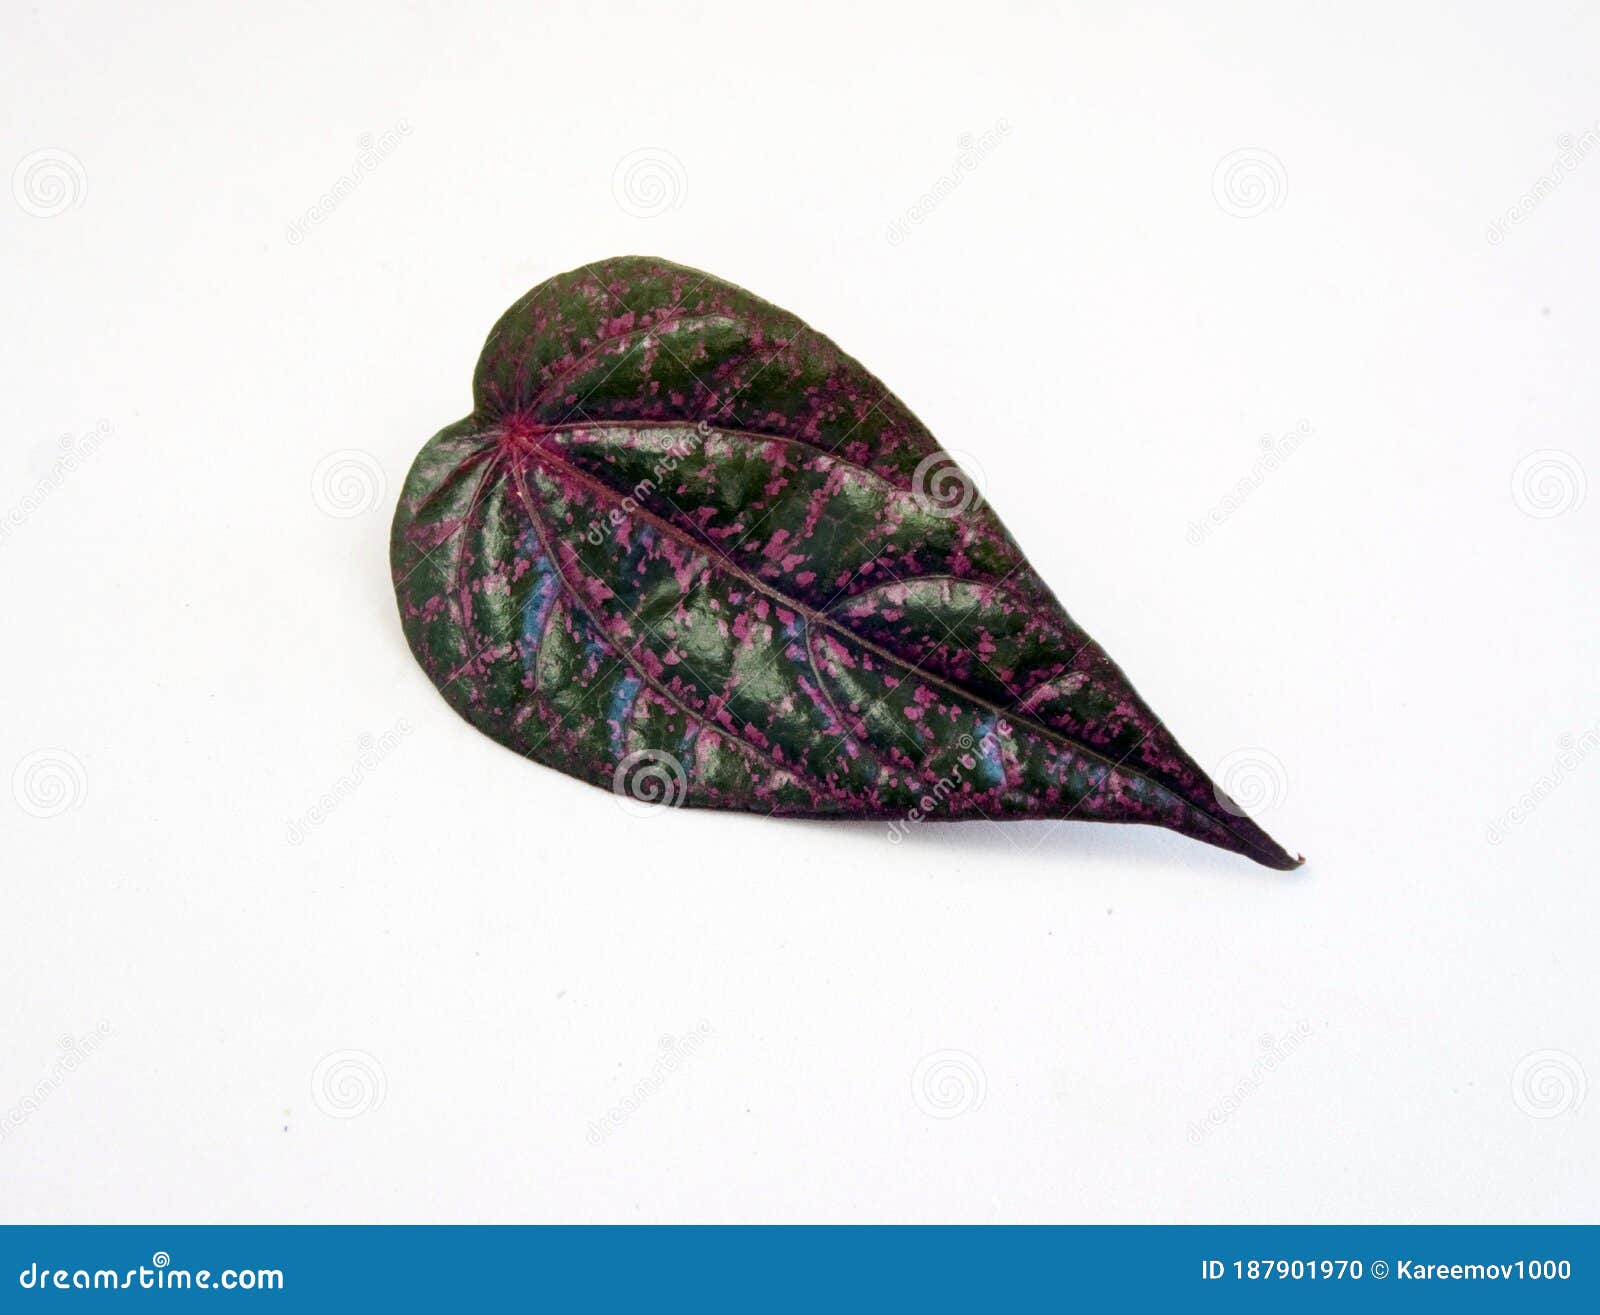 piper ornatum leaf  on white. red betel leaf.